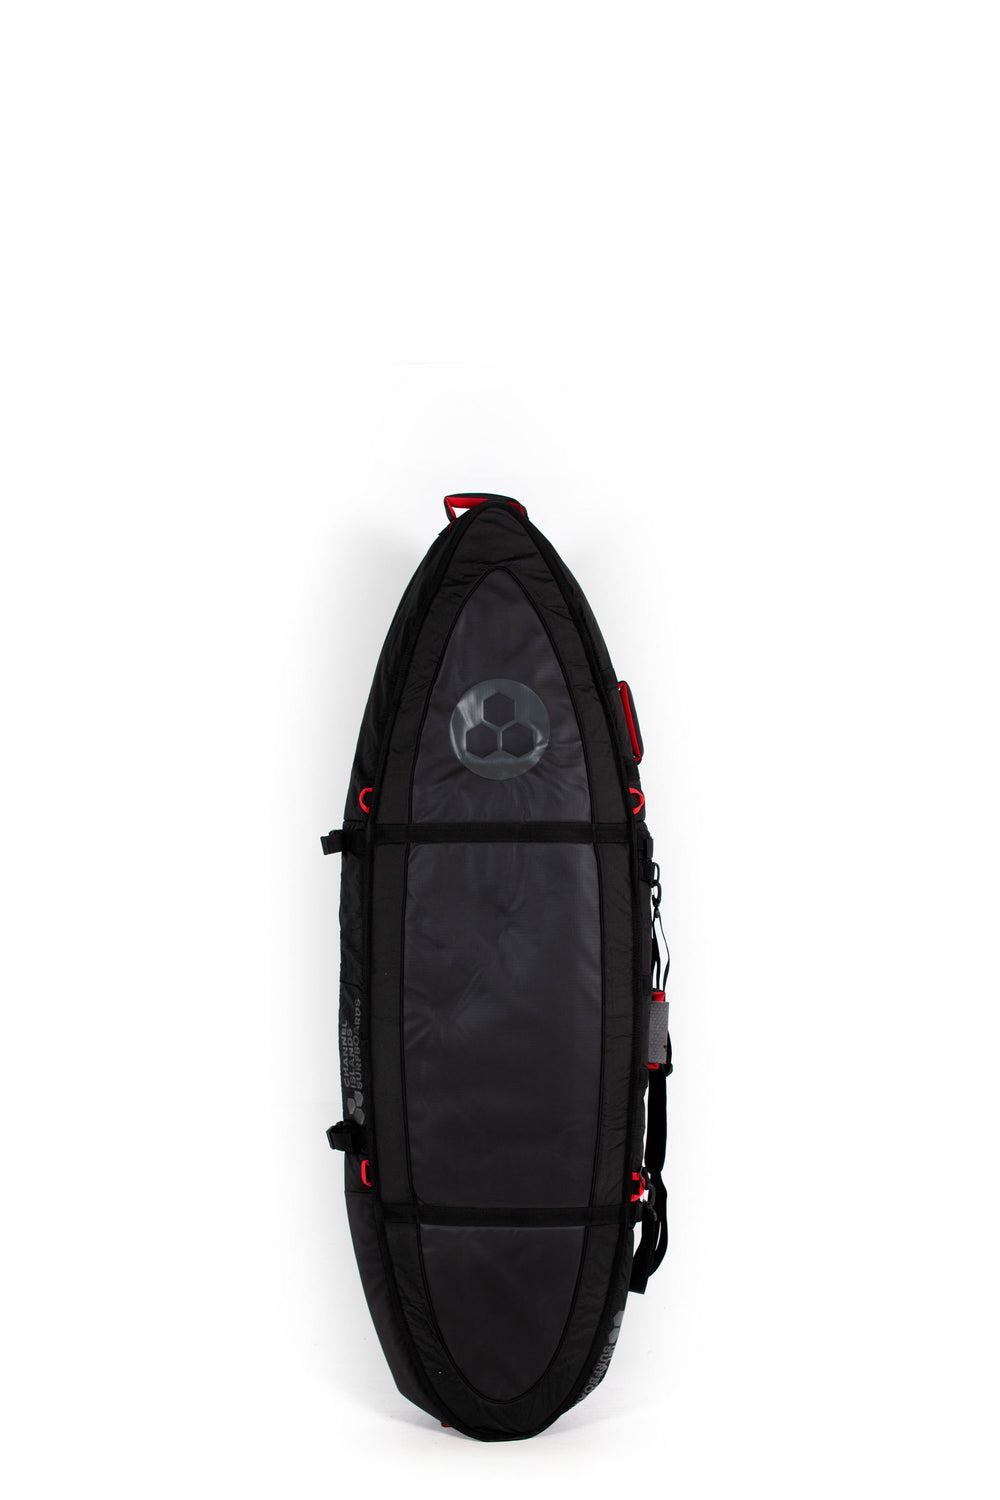 Pukas-Surf-Shop-channel-islands-boardbags-traveler-single-double-shortboard-6_0